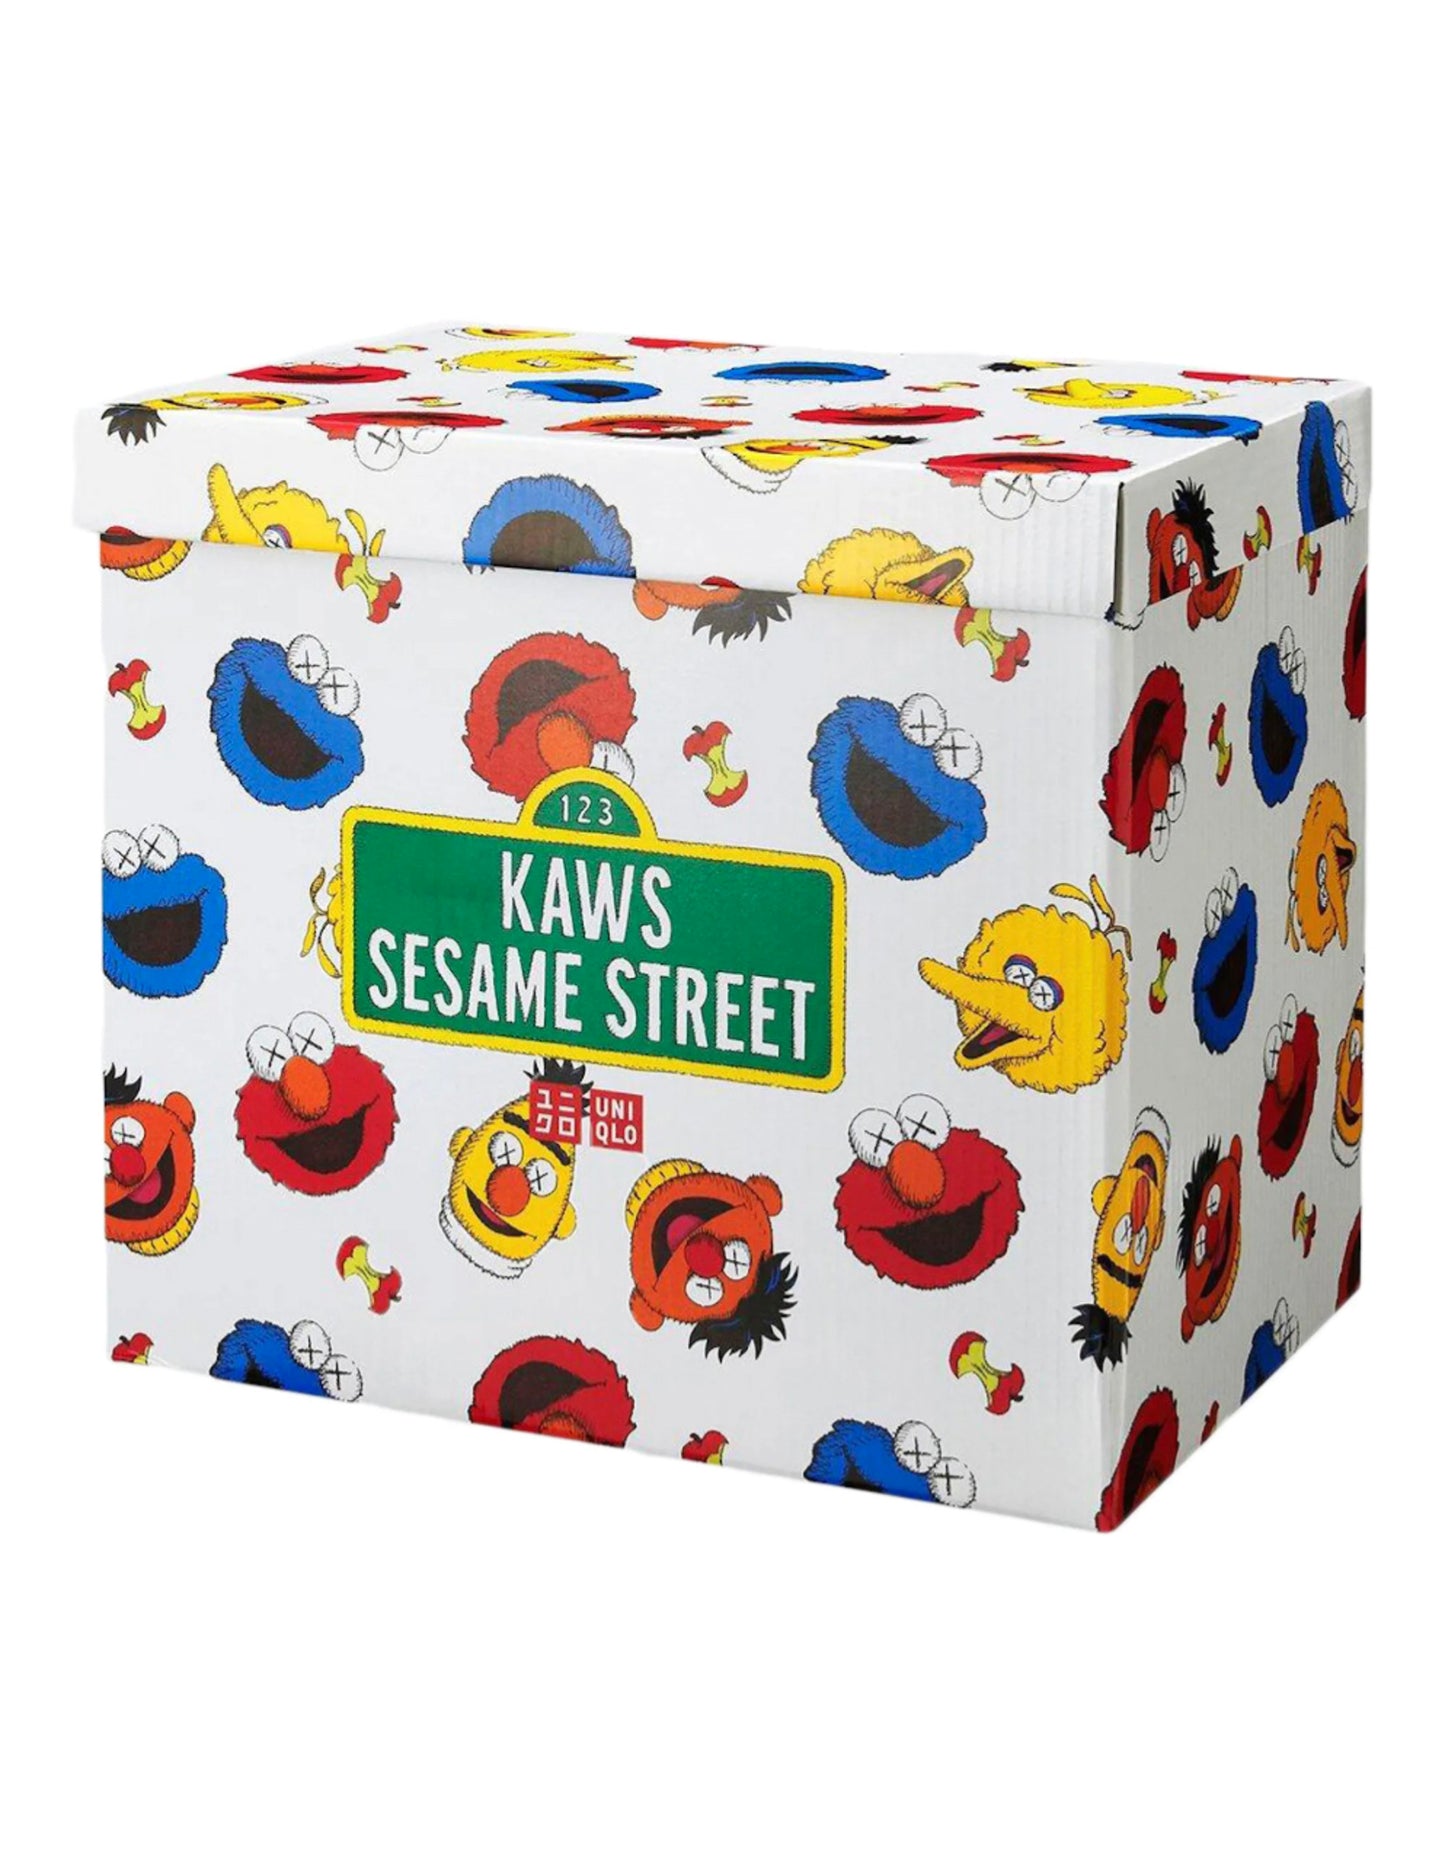 KAWS - Sesame Street Uniqlo Plush Set of 5, 2018